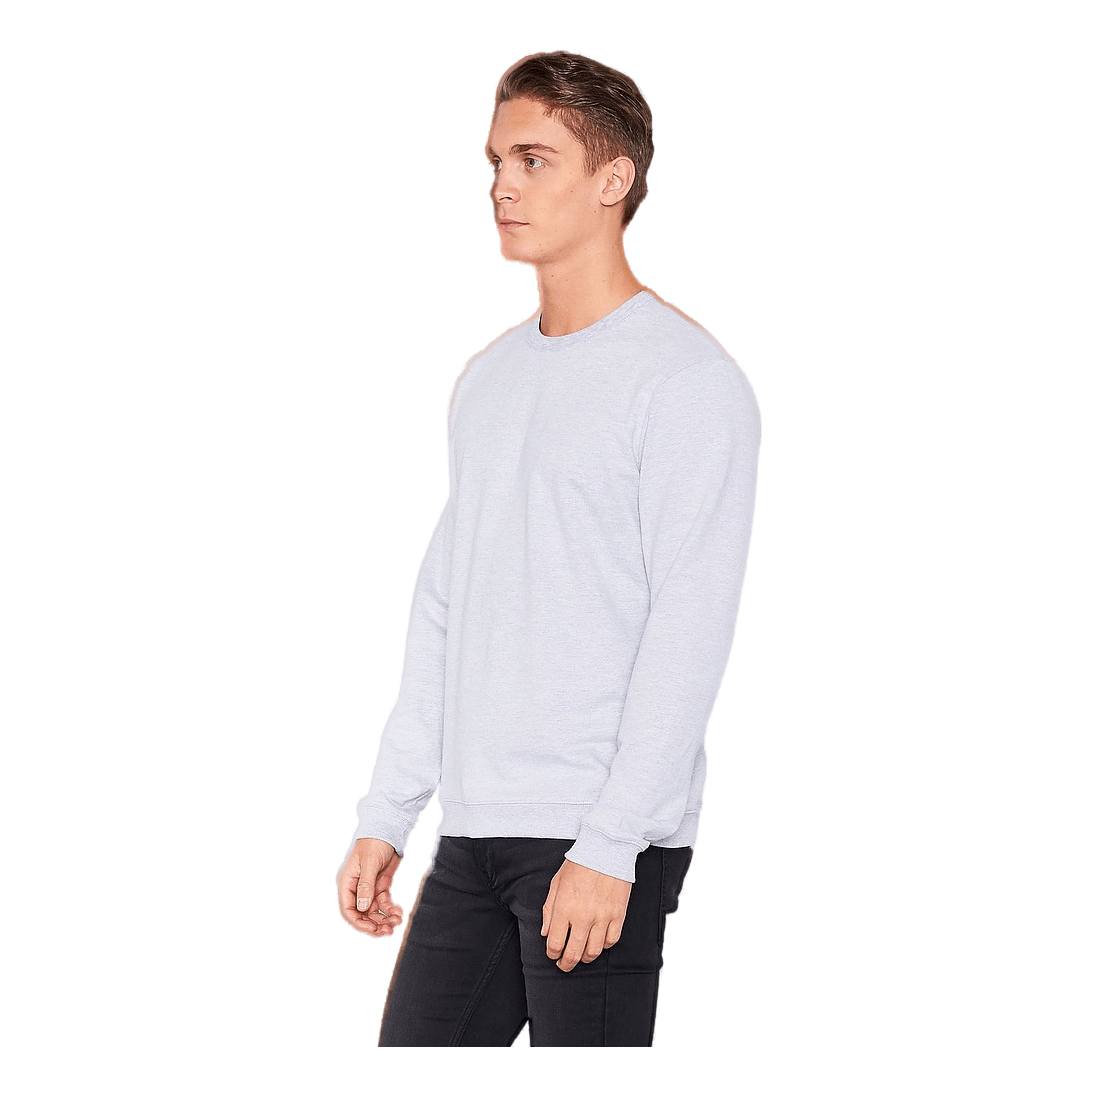 Sweatshirt Grey